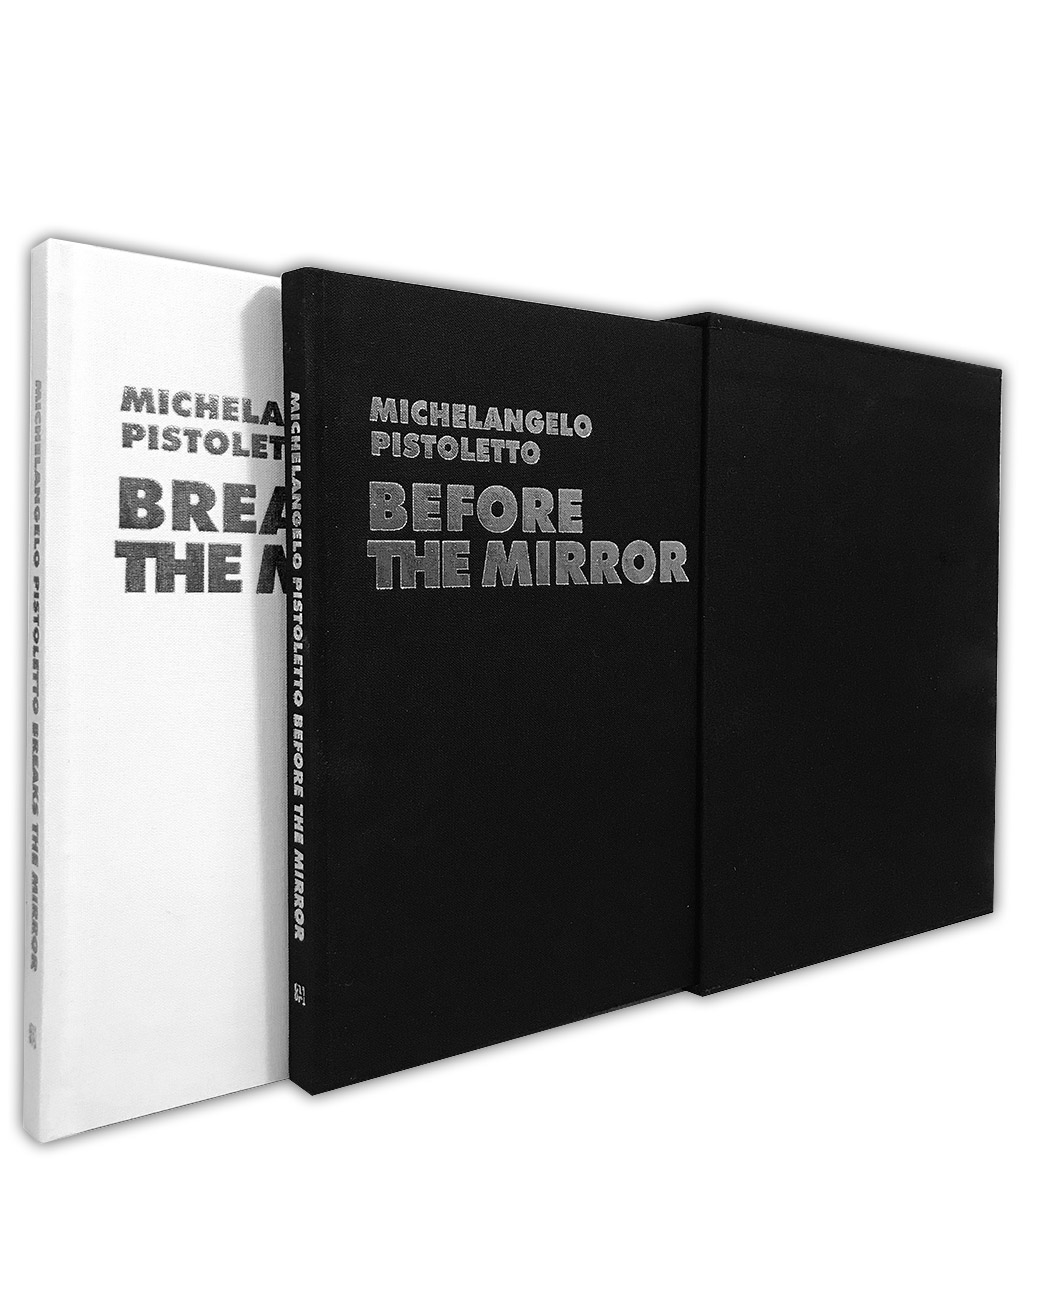 MICHELANGELO PISTOLETTO. Before the Mirror, Breaks the Mirror, 2015